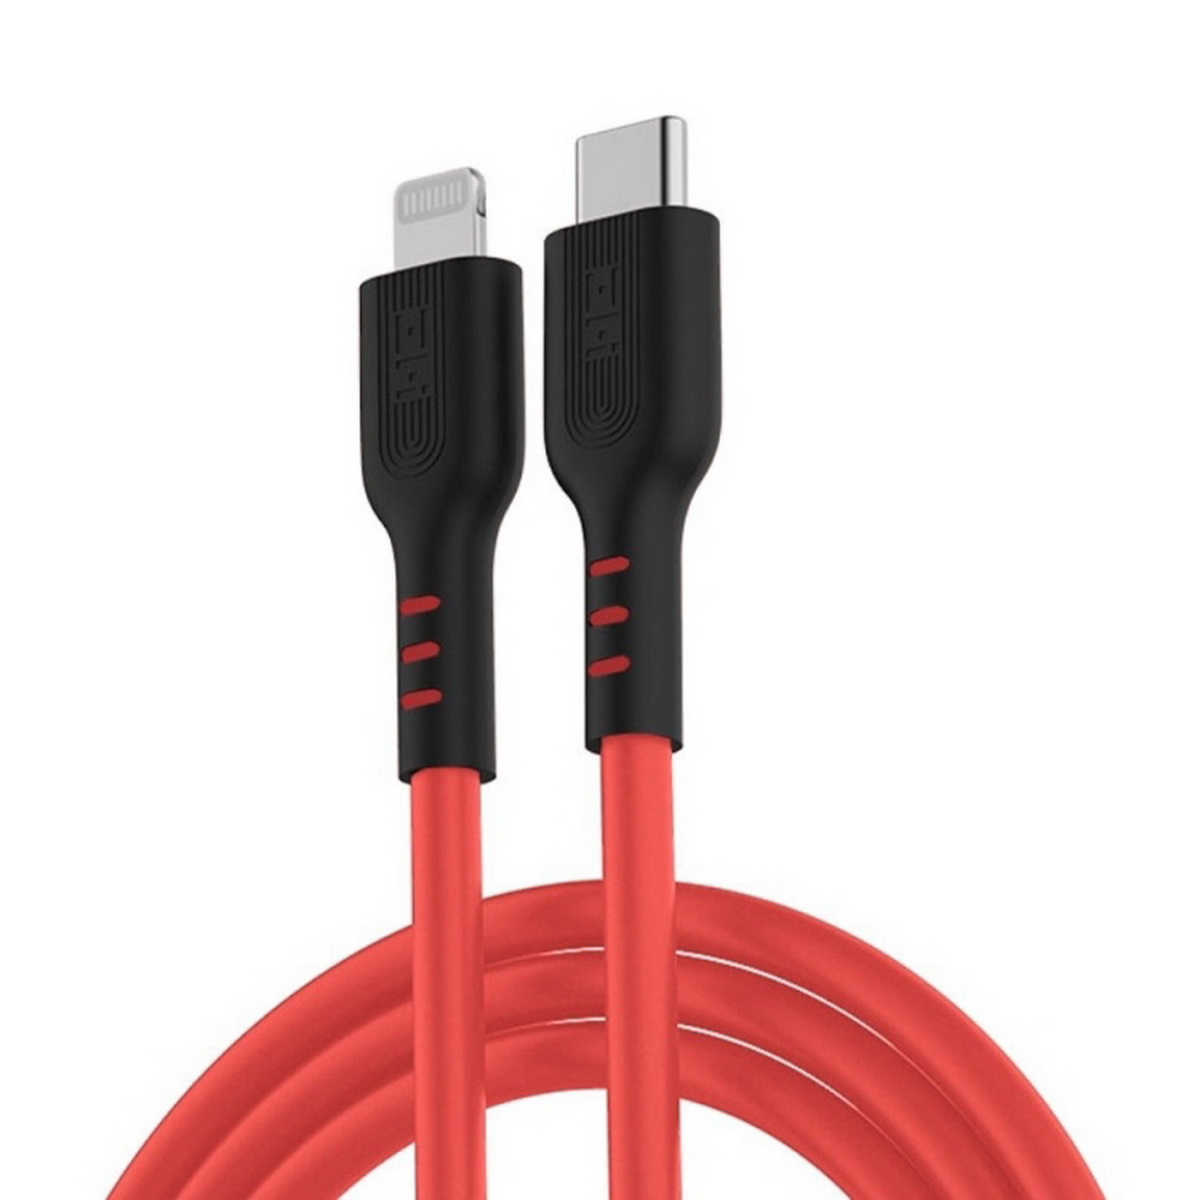 USB-кабель ZMI GL870 Type-C to Lightning silicone Cable ?1m? red (ZMKGL870CNRD)